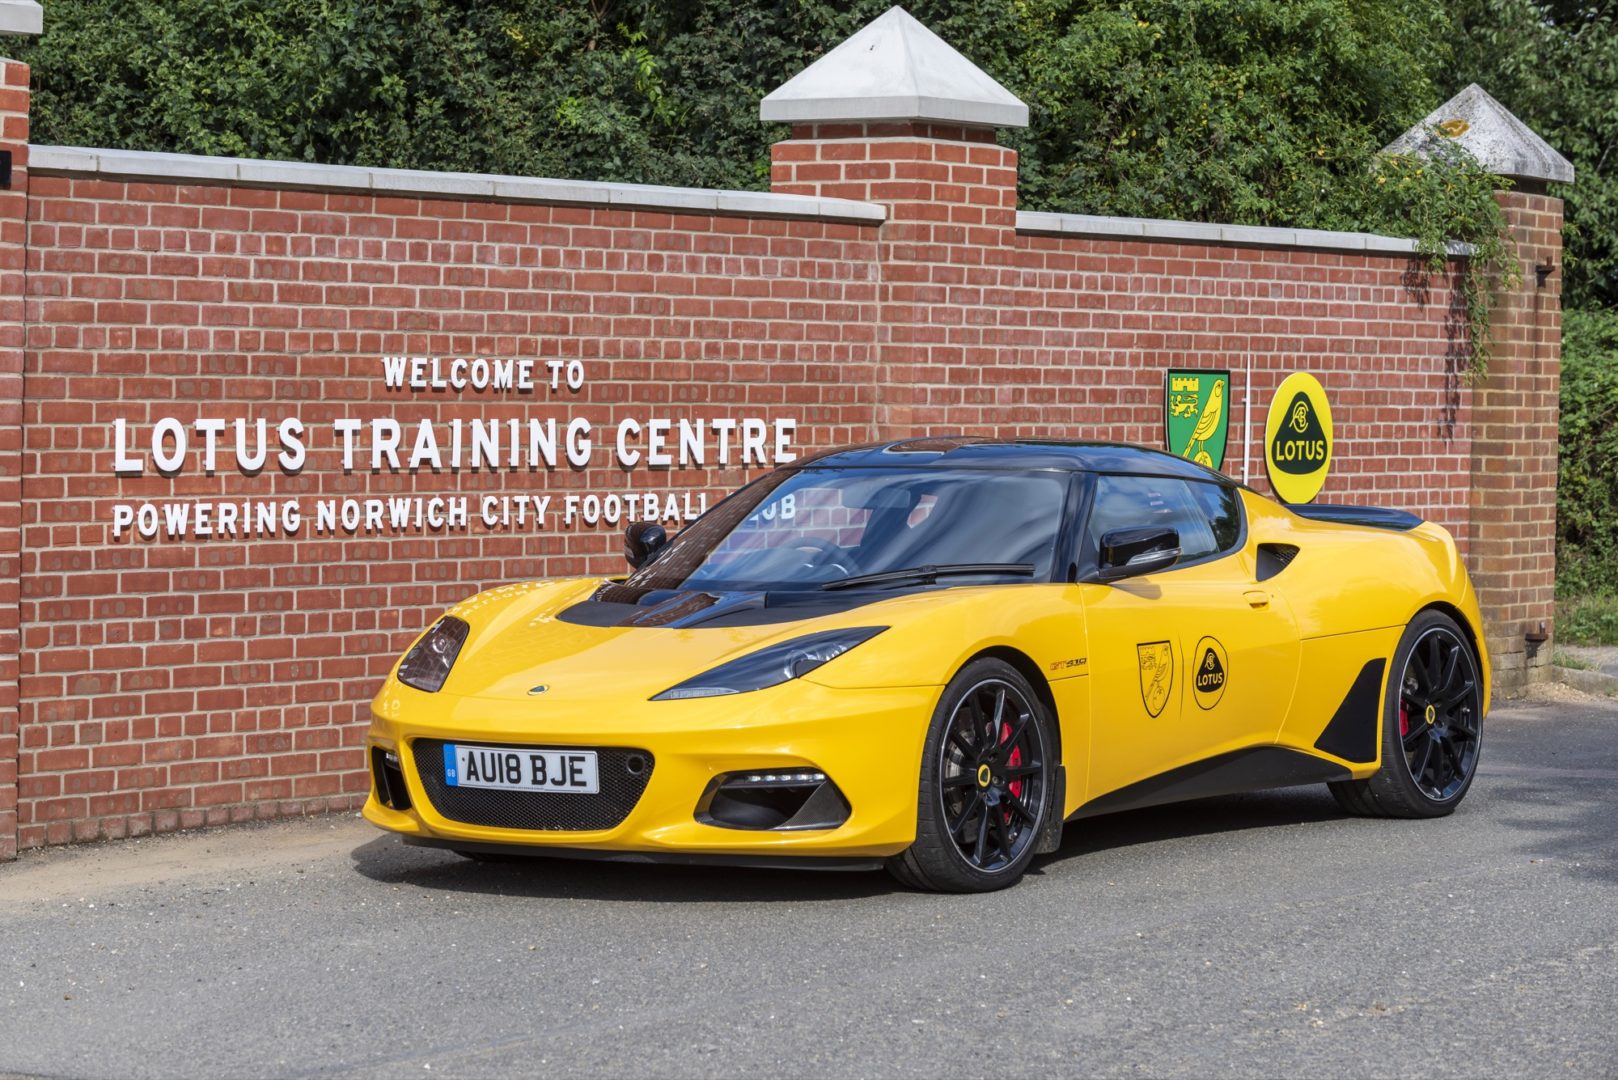 Lotus-presenta-il-nuovo-logo-partnership-col-Norwich-City-football-Club-1-1618x1080.jpg